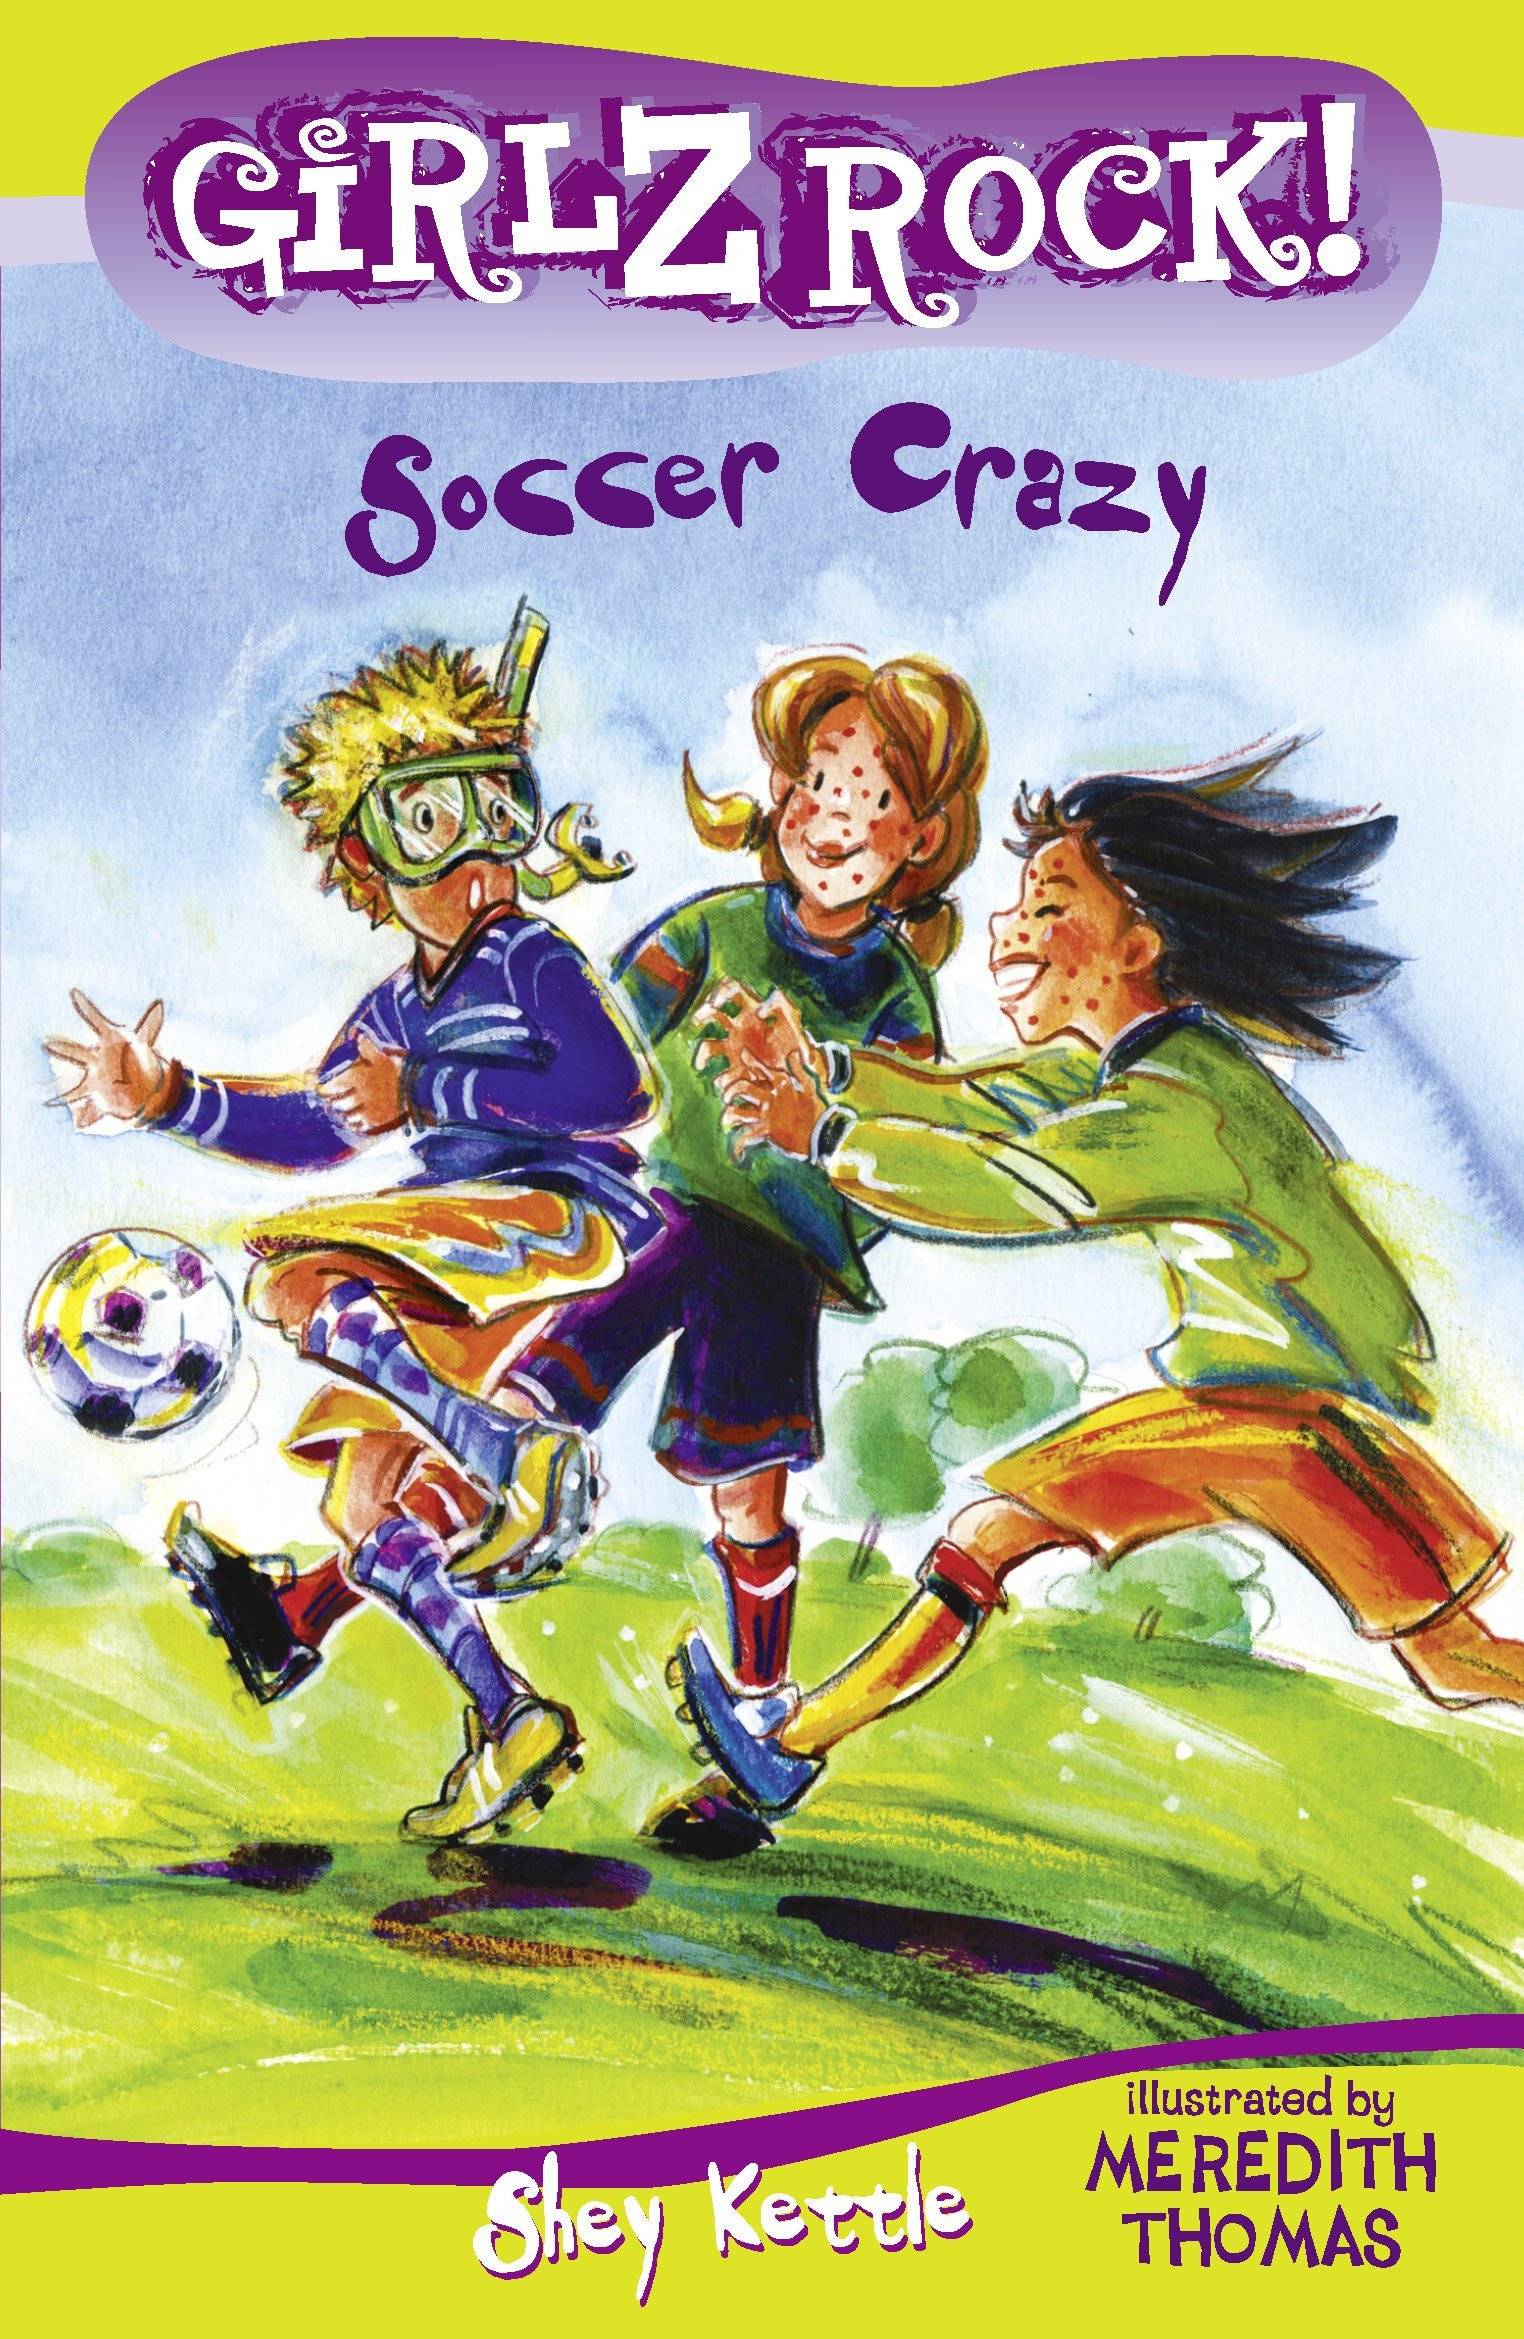 IMG : Girlz Rock! Soccer Crazy#24